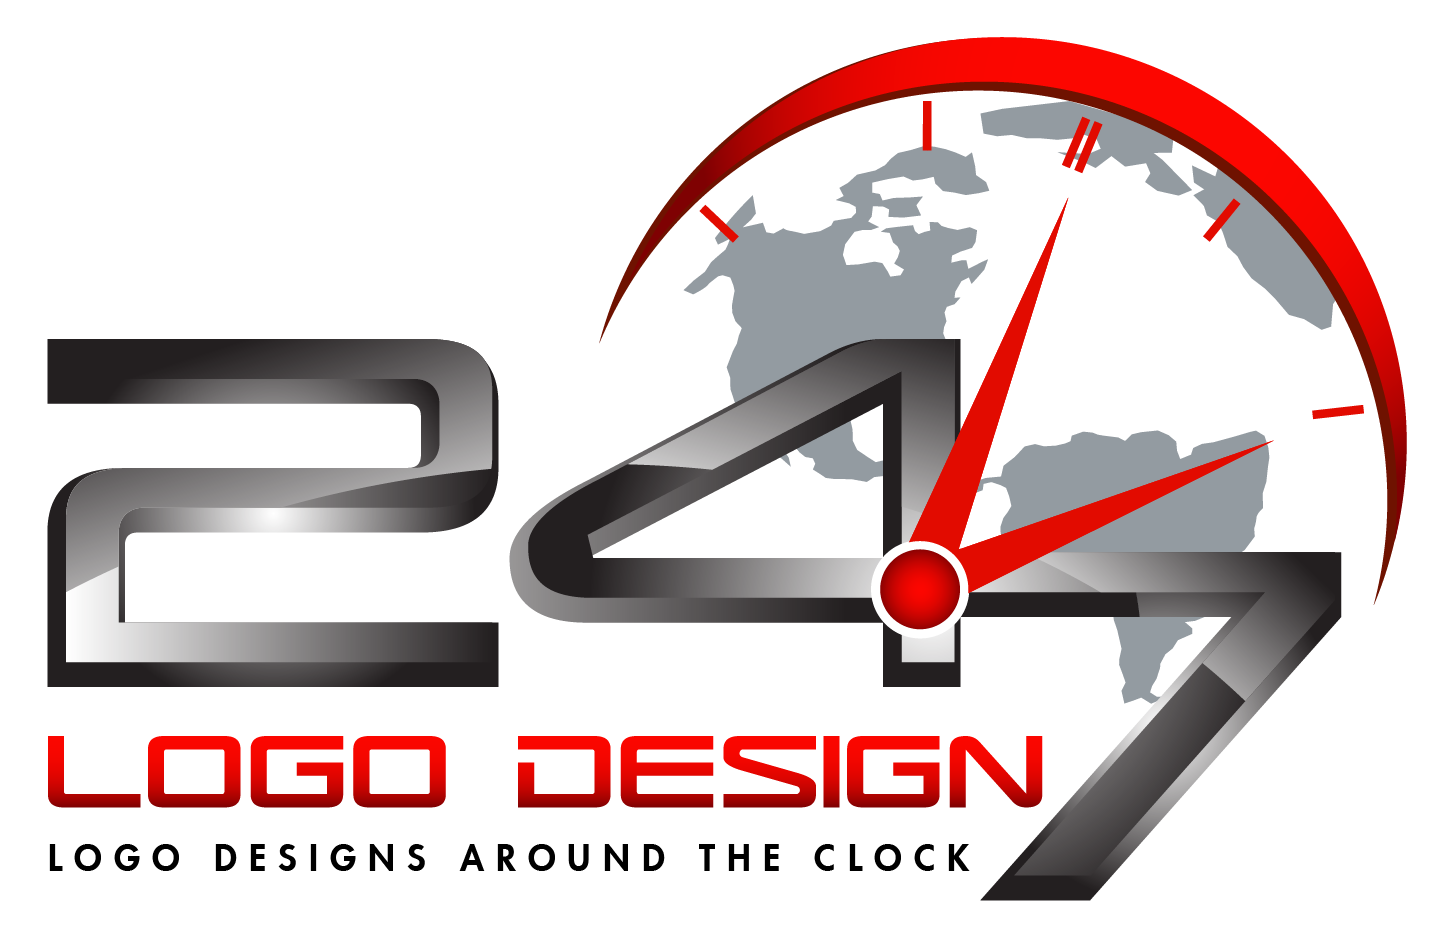 247logodesign